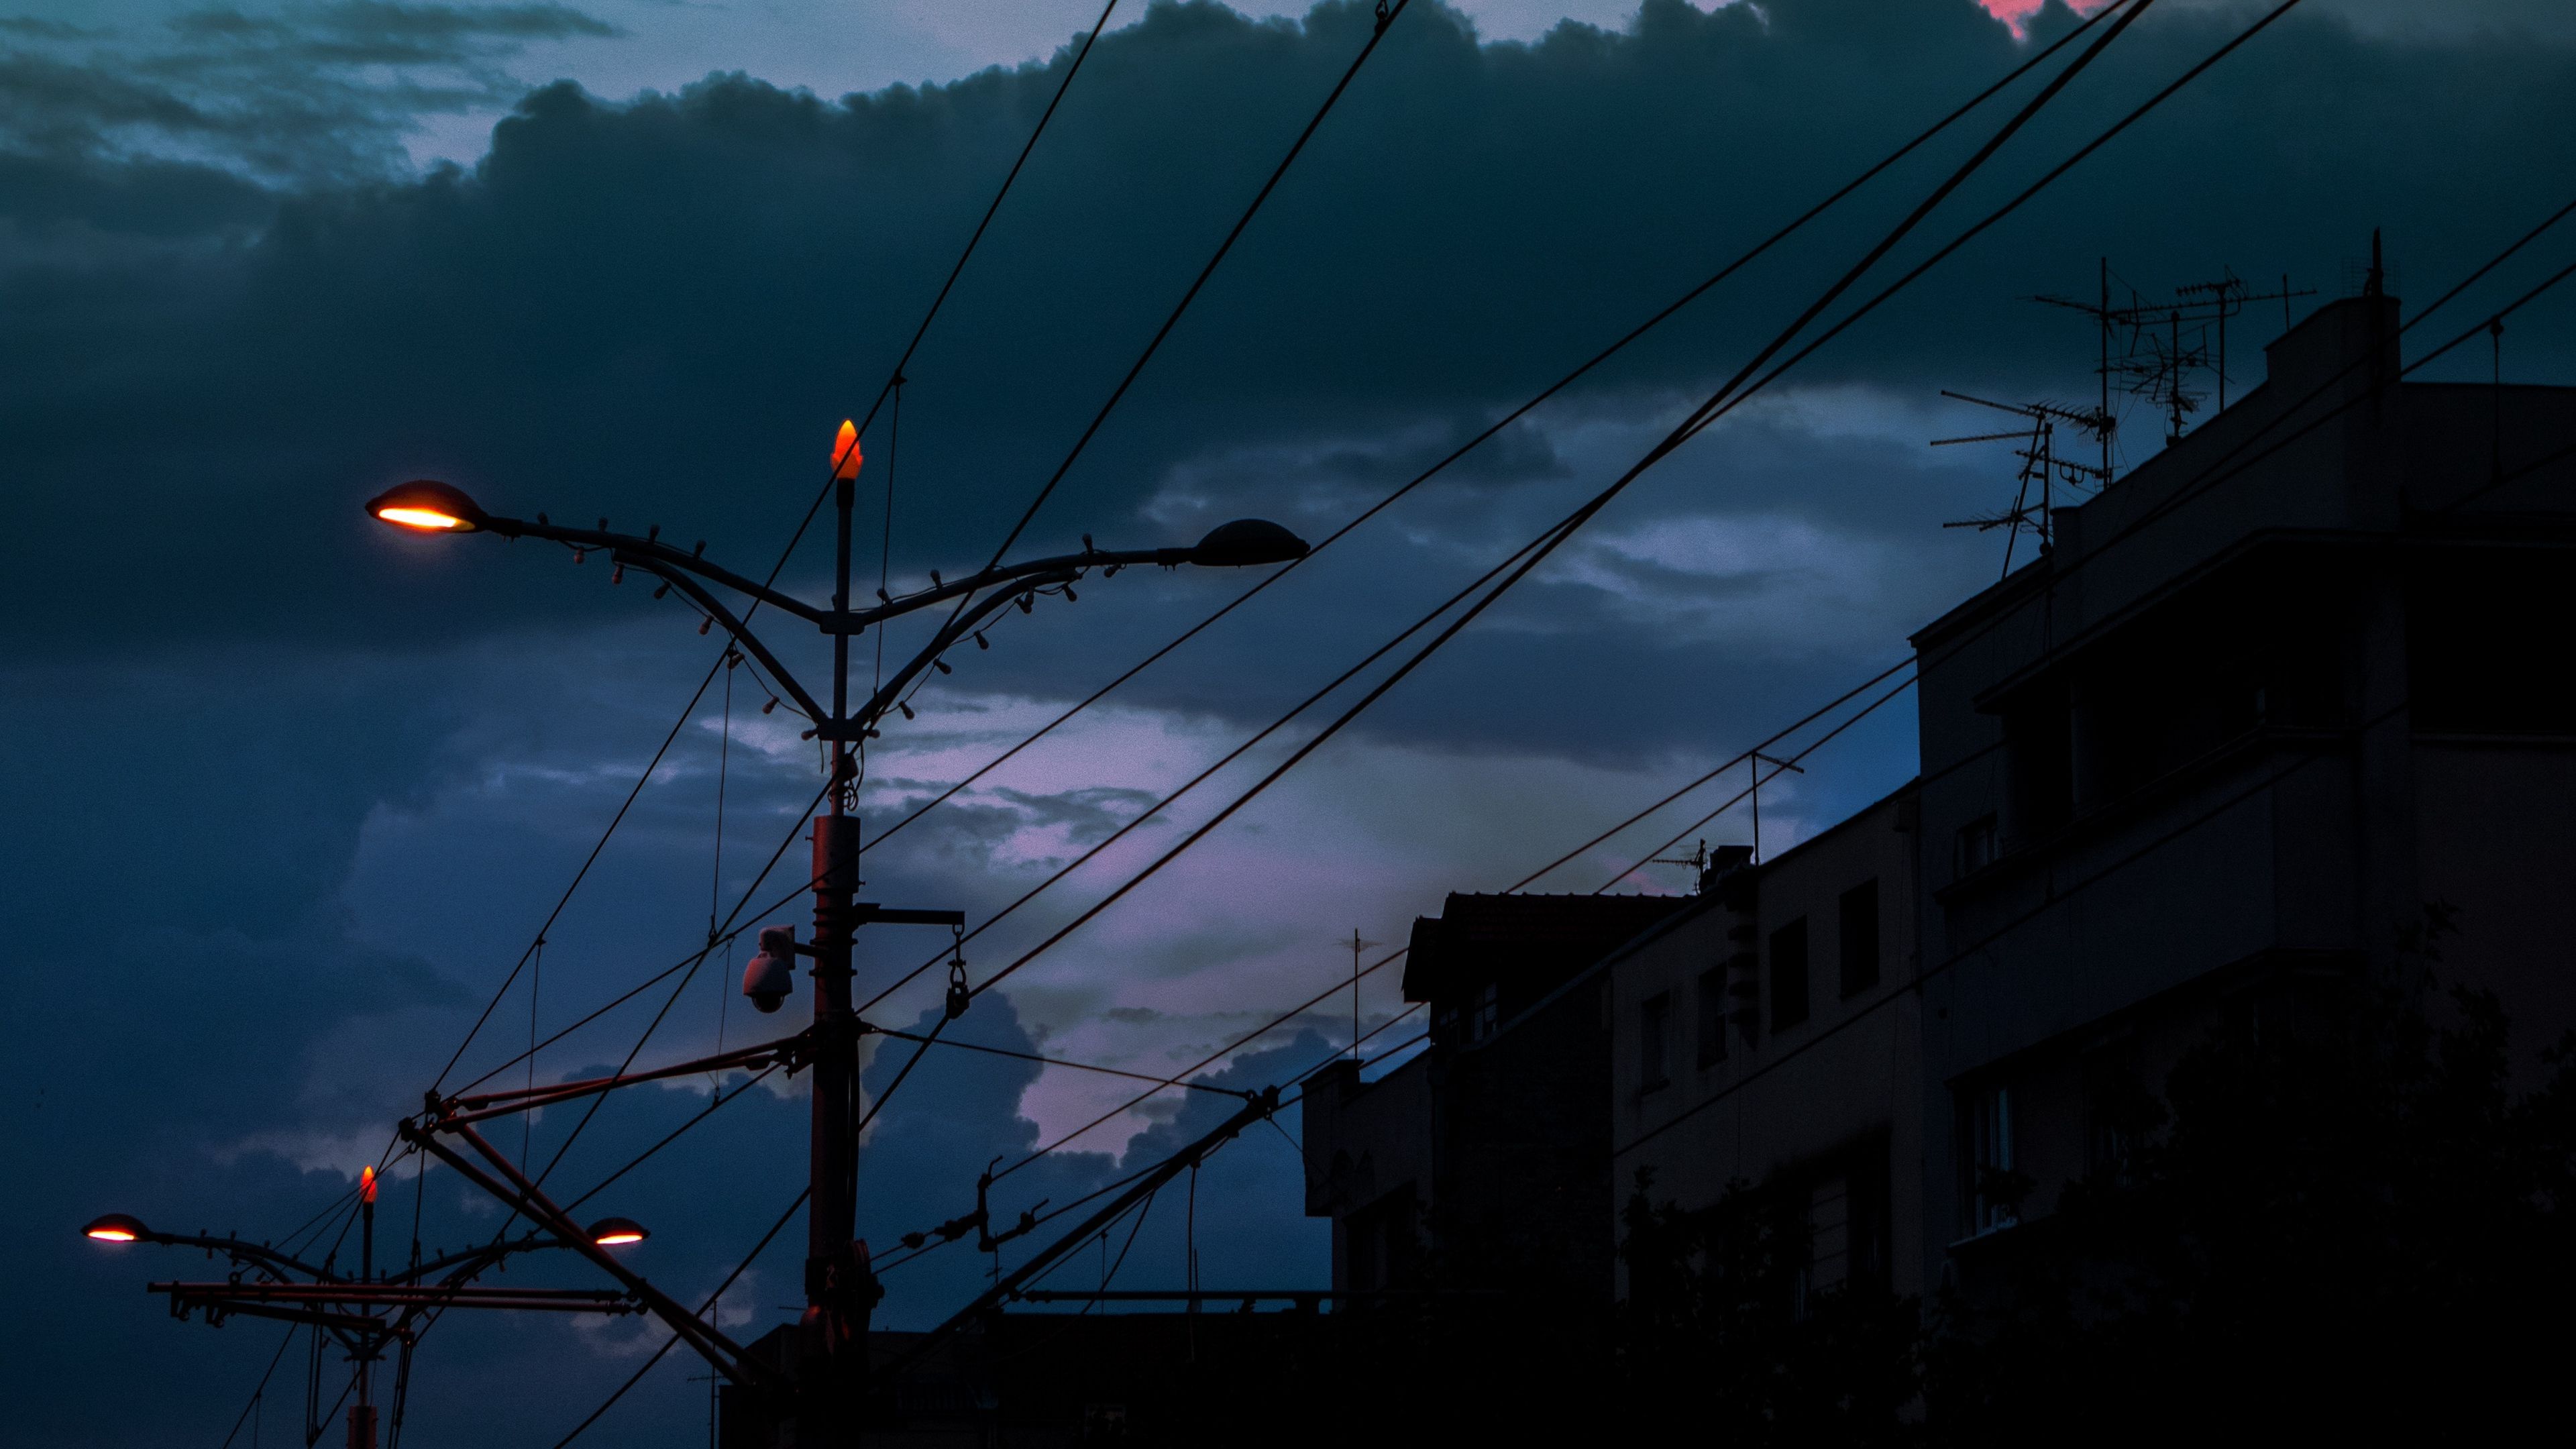 3840x2160 Hintergrundbild 3840x2160. Download wallpaper 3840x2160 cable, poles, lights, city, twilight, dark 4k uhd 16:9 HD background:9 background, Dark landscape, 16:9 aesthetic background